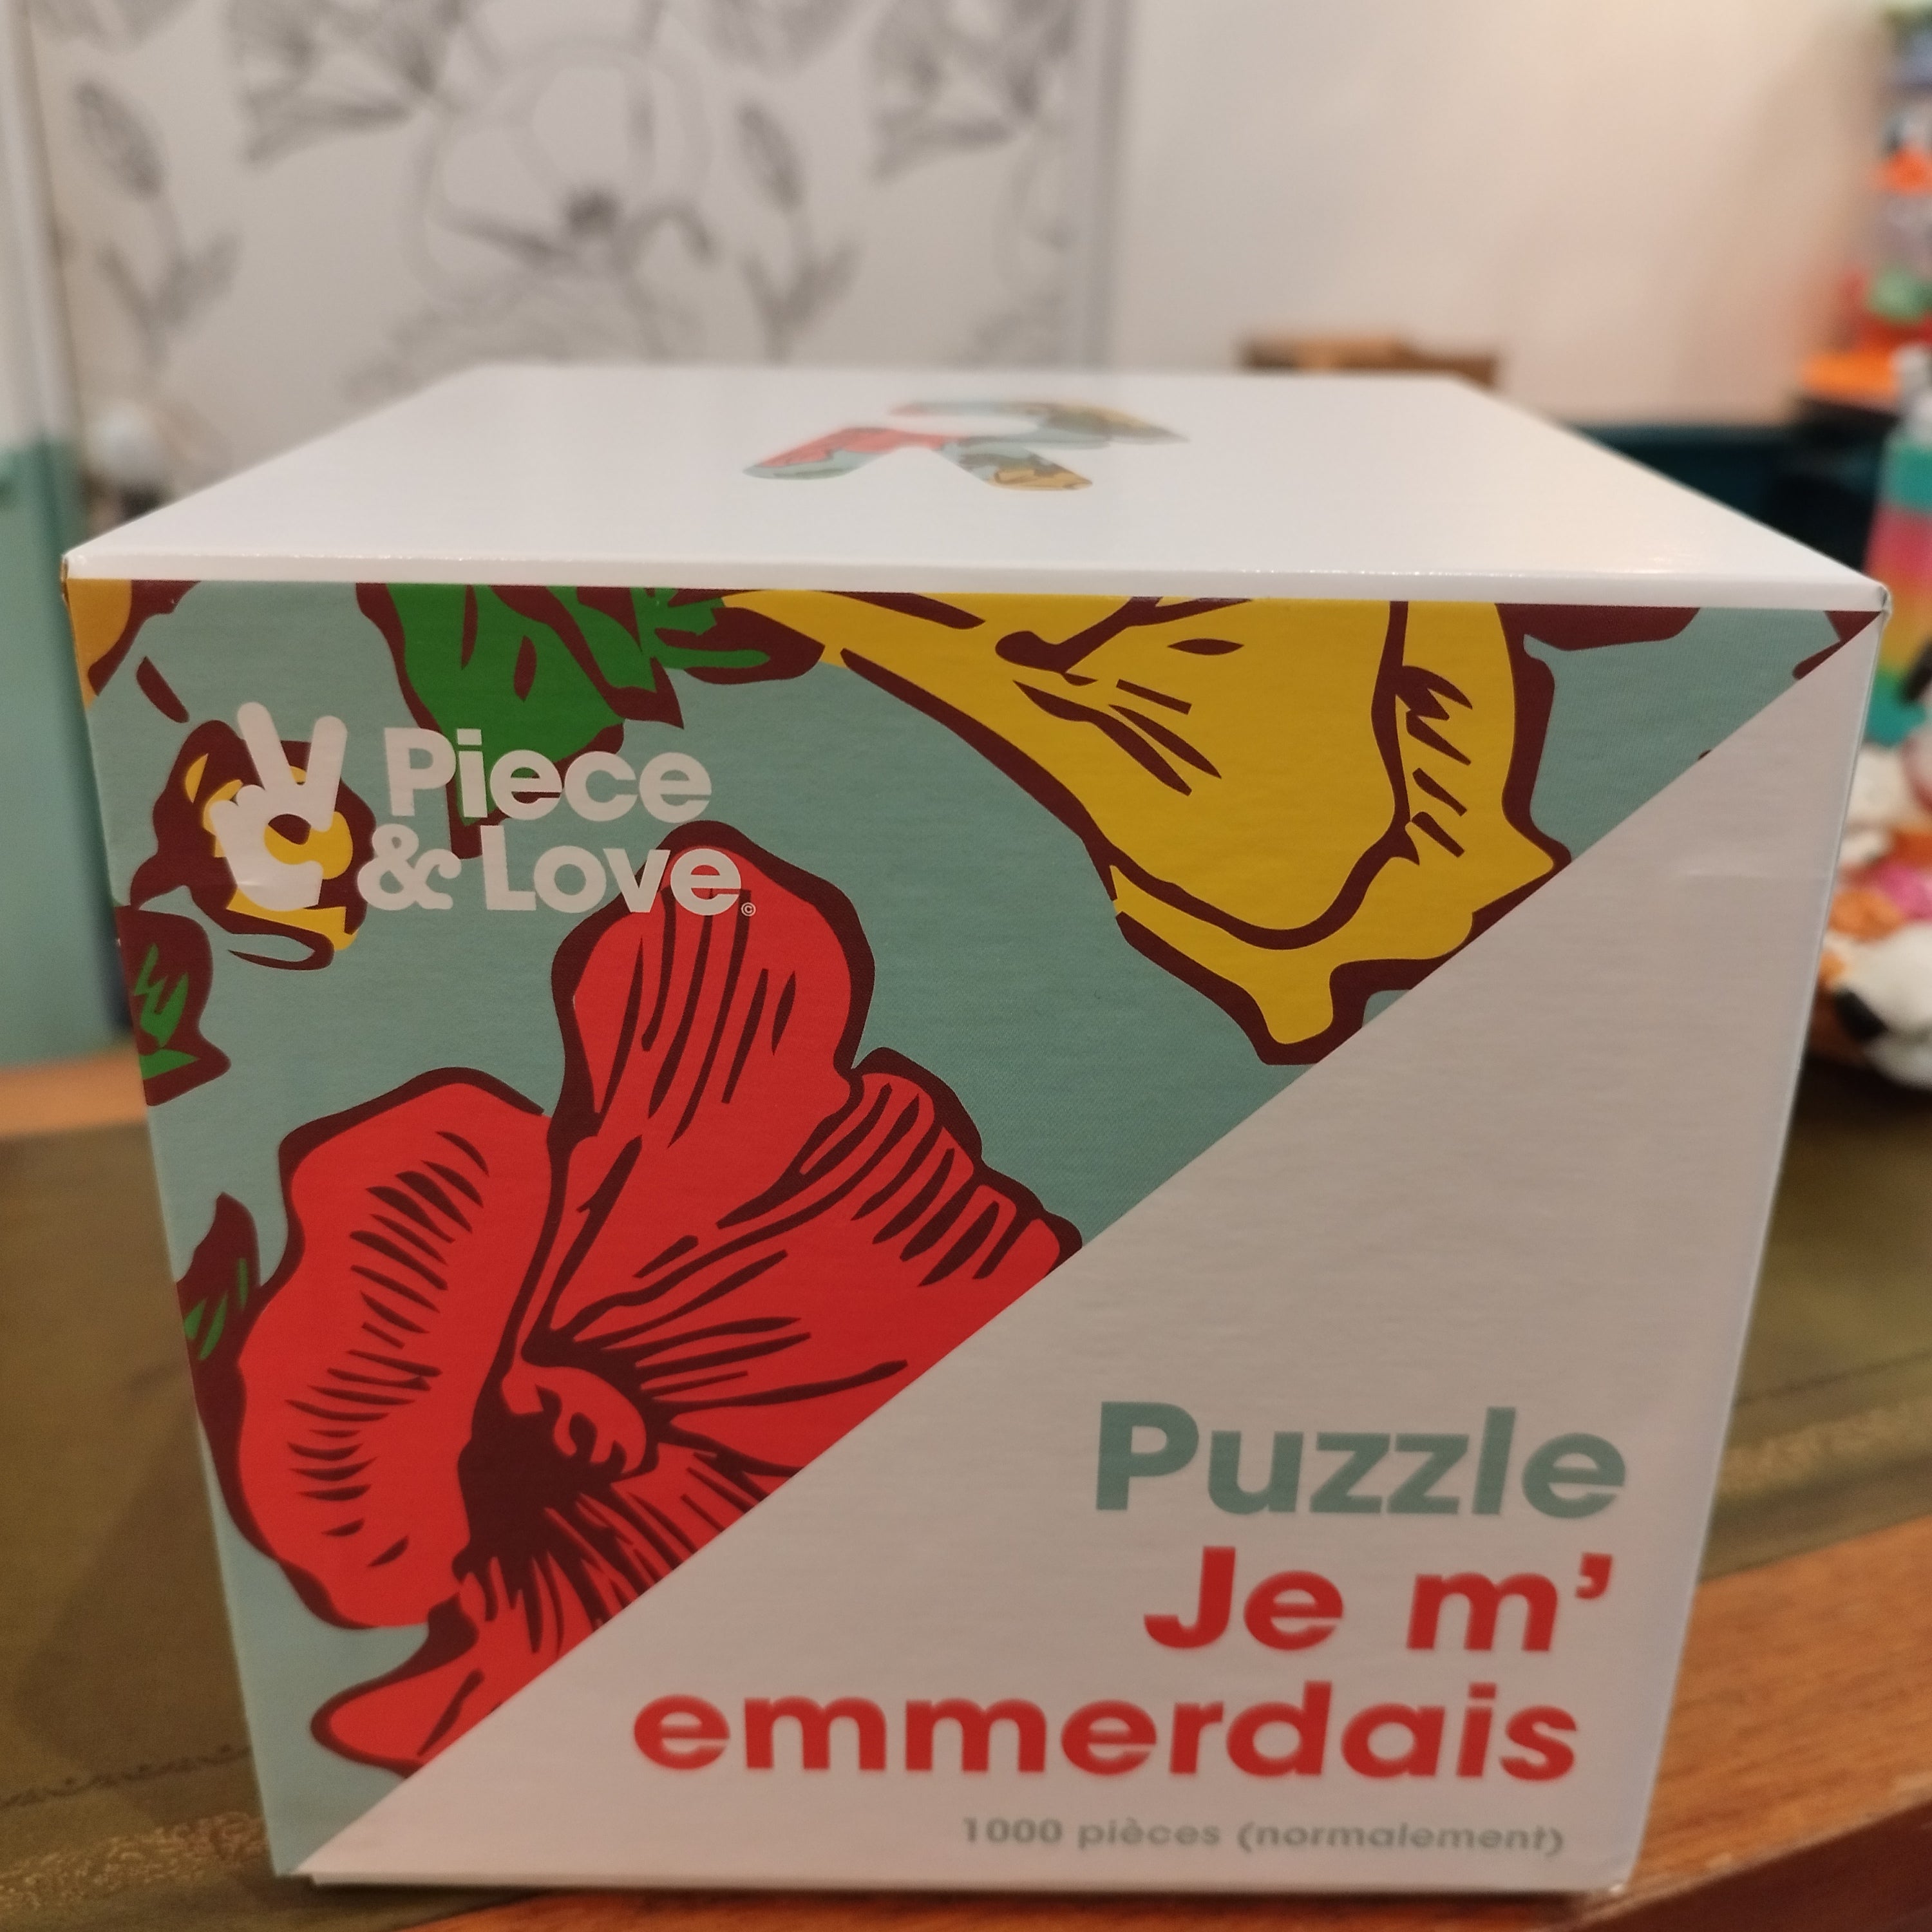 Puzzle Je m'emmerdais 1000 pièces - Made in France - Piece & Love